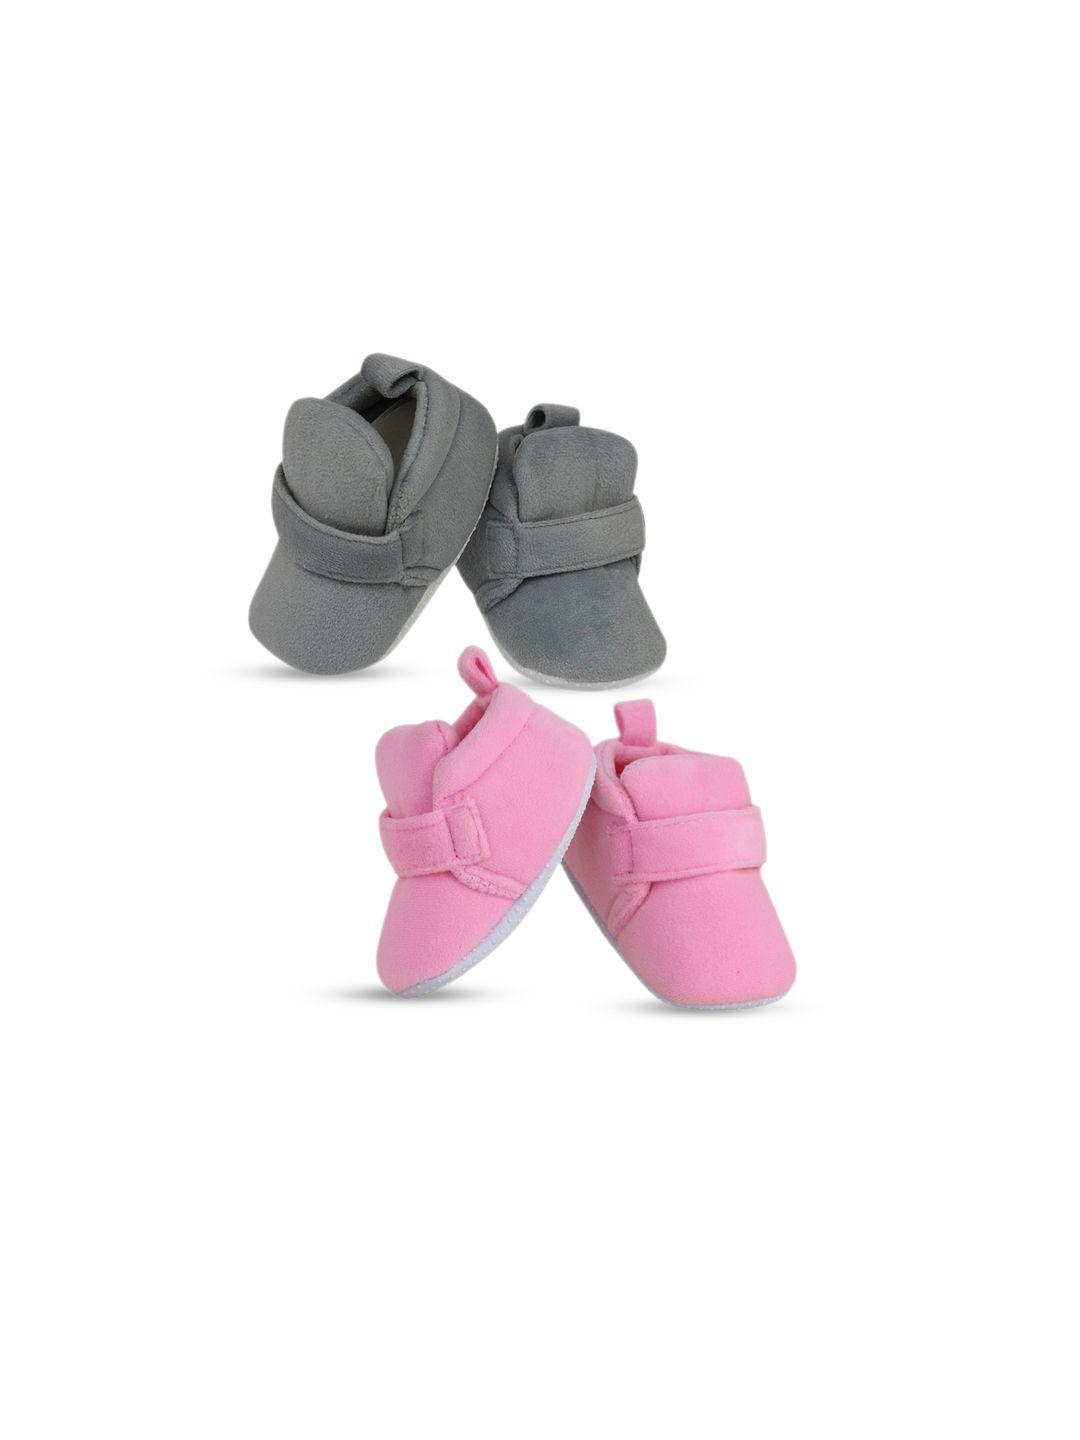 baesd-infants-set-of-2-anti-skid-sole-velvet-booties